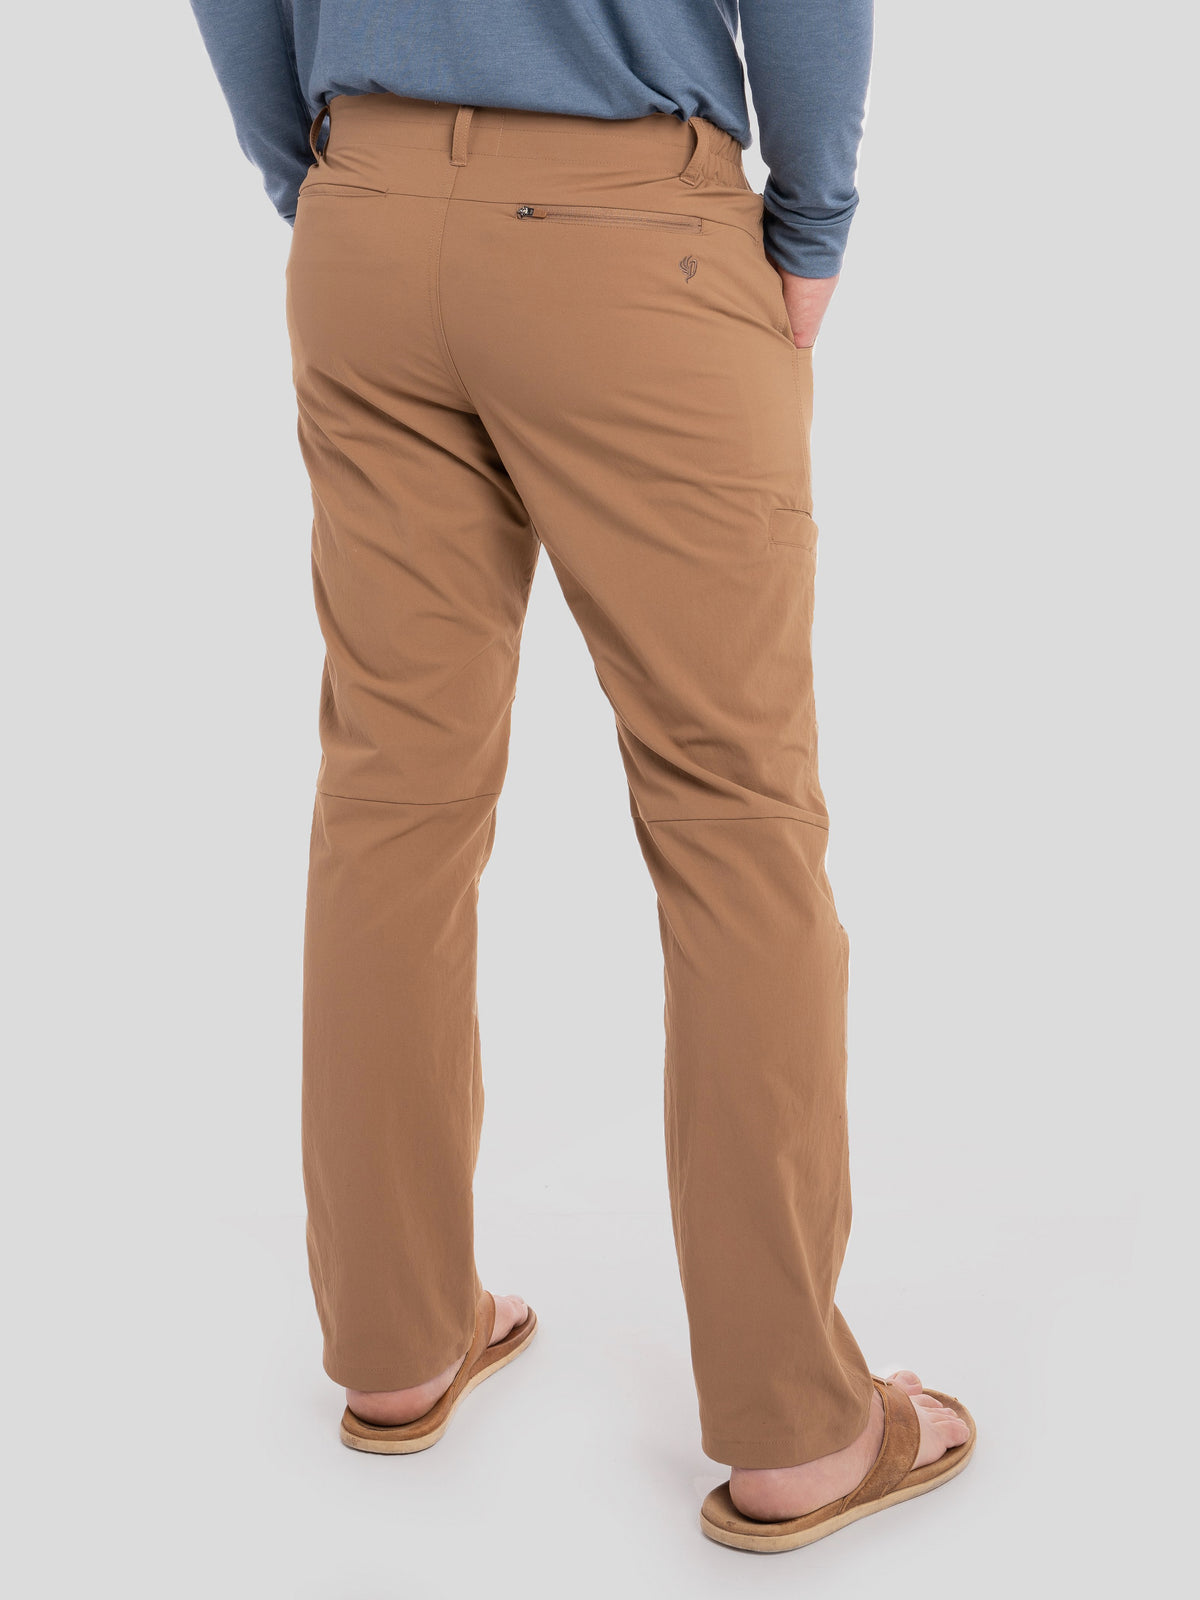 Men's Drifter Pants - Pintail Brown